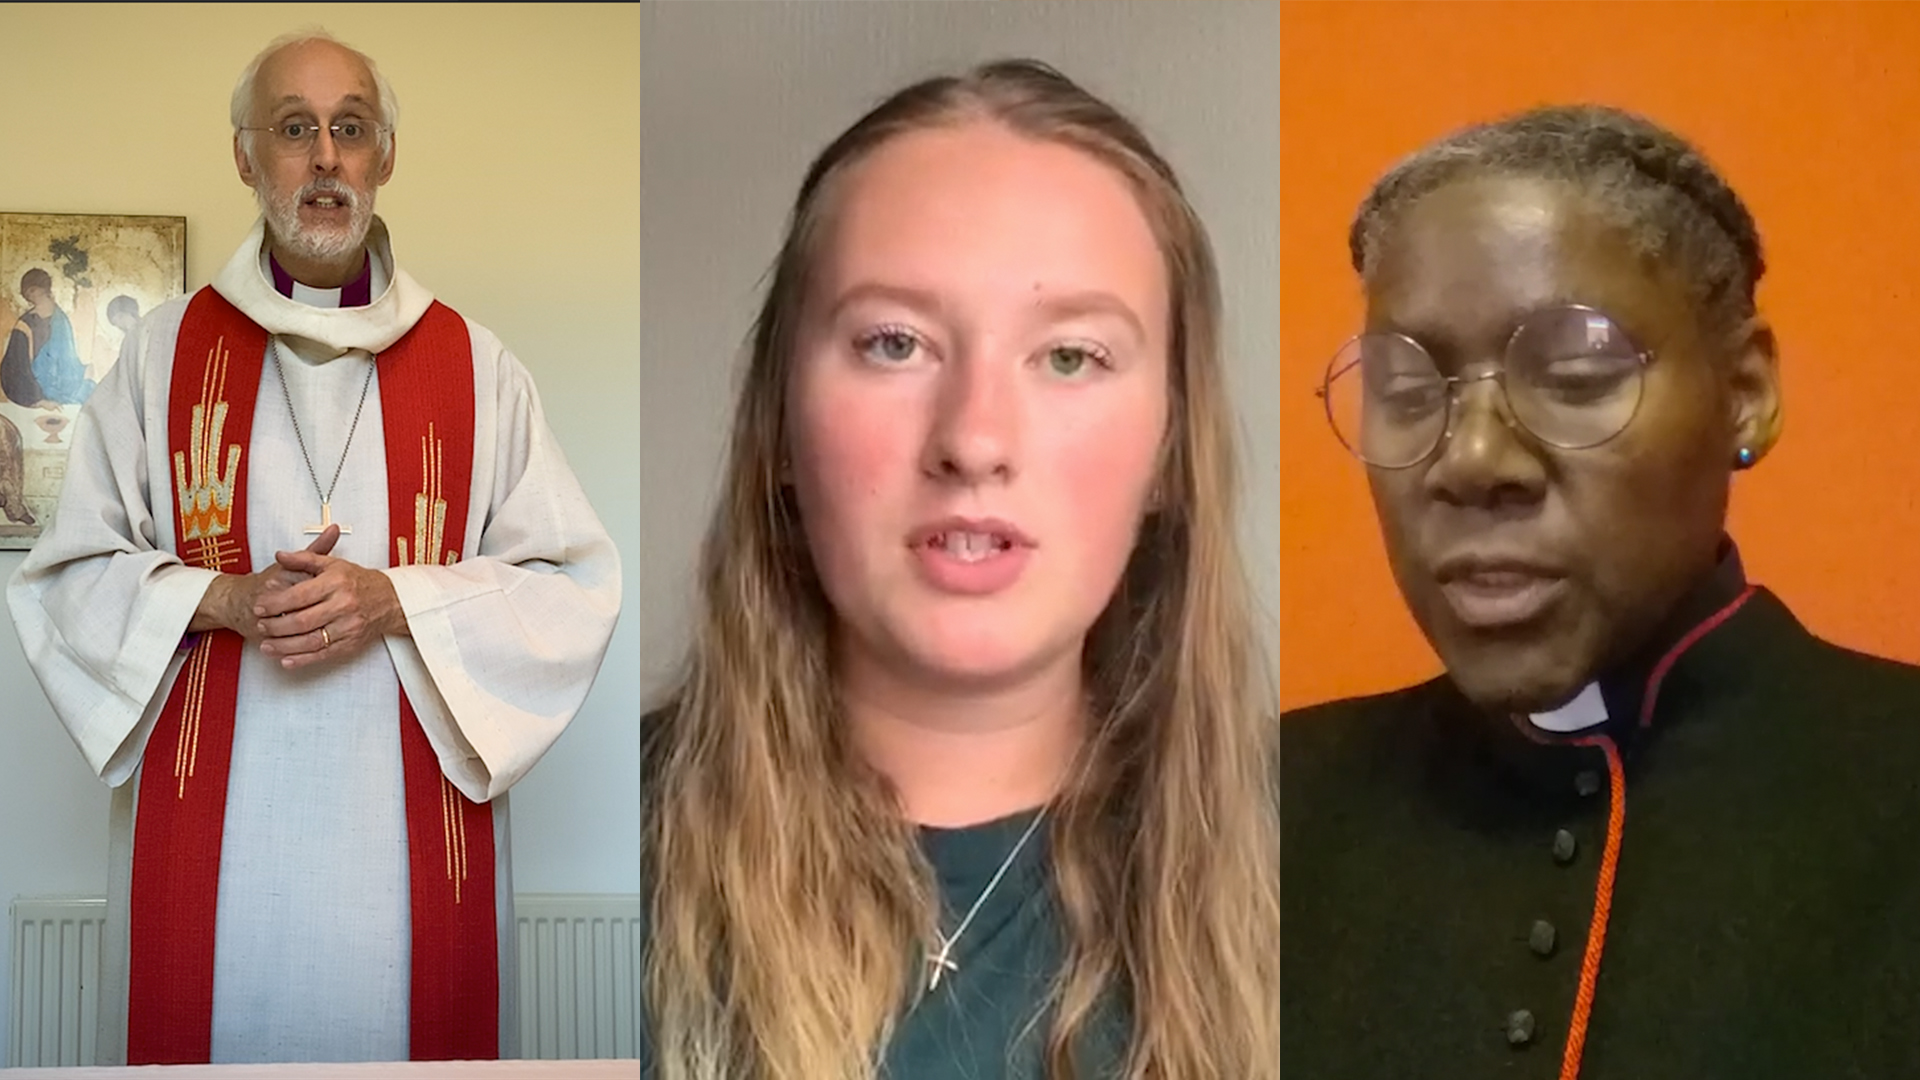 The three contributors to the Palm Sunday virtual service.